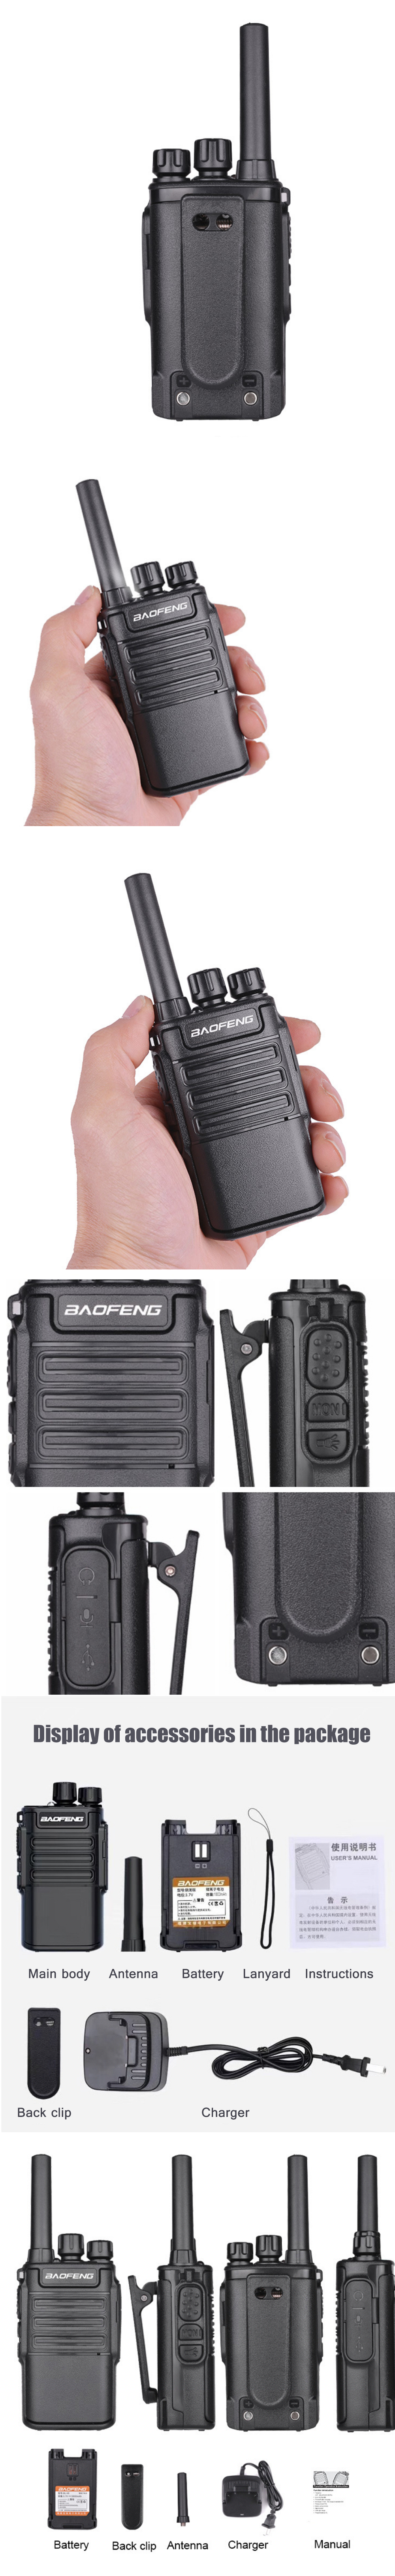 BAOFENG-V8-Portable-Wiress-Walkie-Talkie-1800mAh-Handheld-Two-Way-Radio-Communicator-Transceiver-For-1709473-2